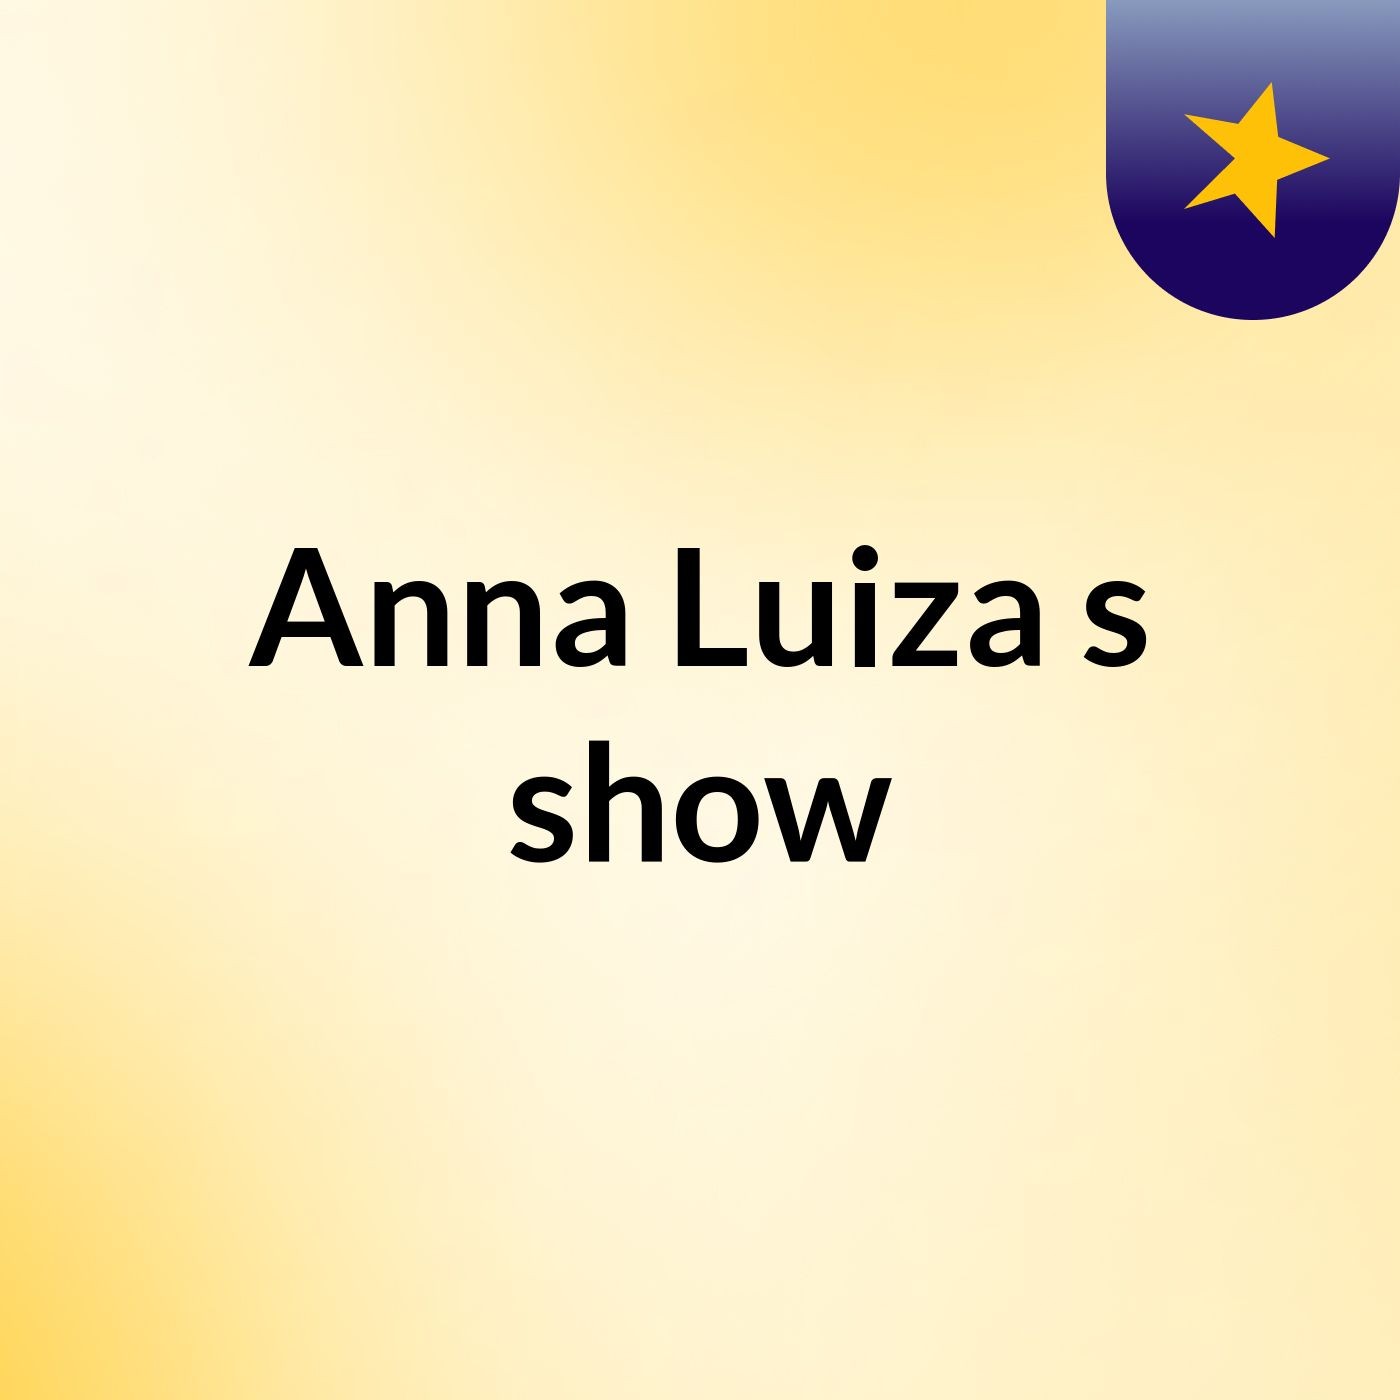 Anna Luiza's show